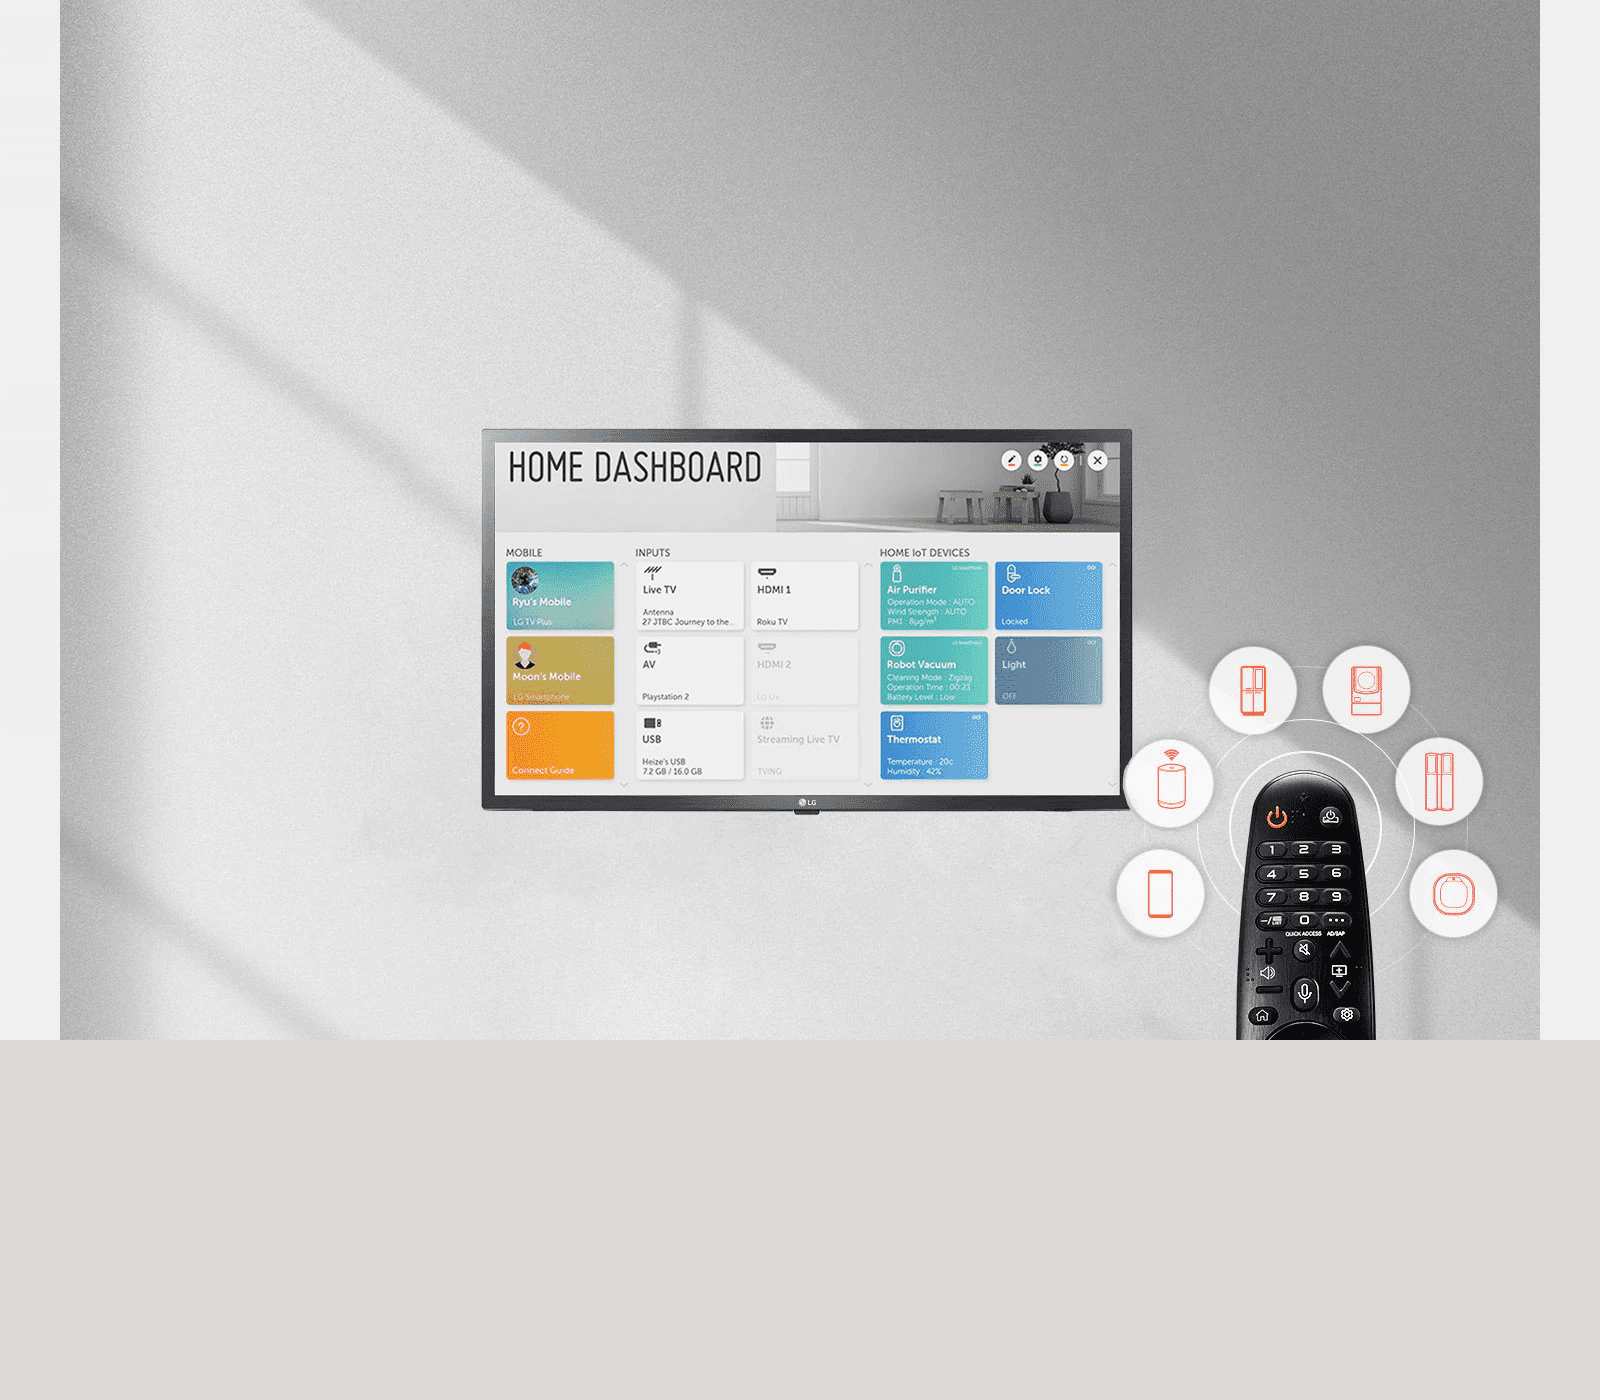 LG Smart LED TV Home Dashboard